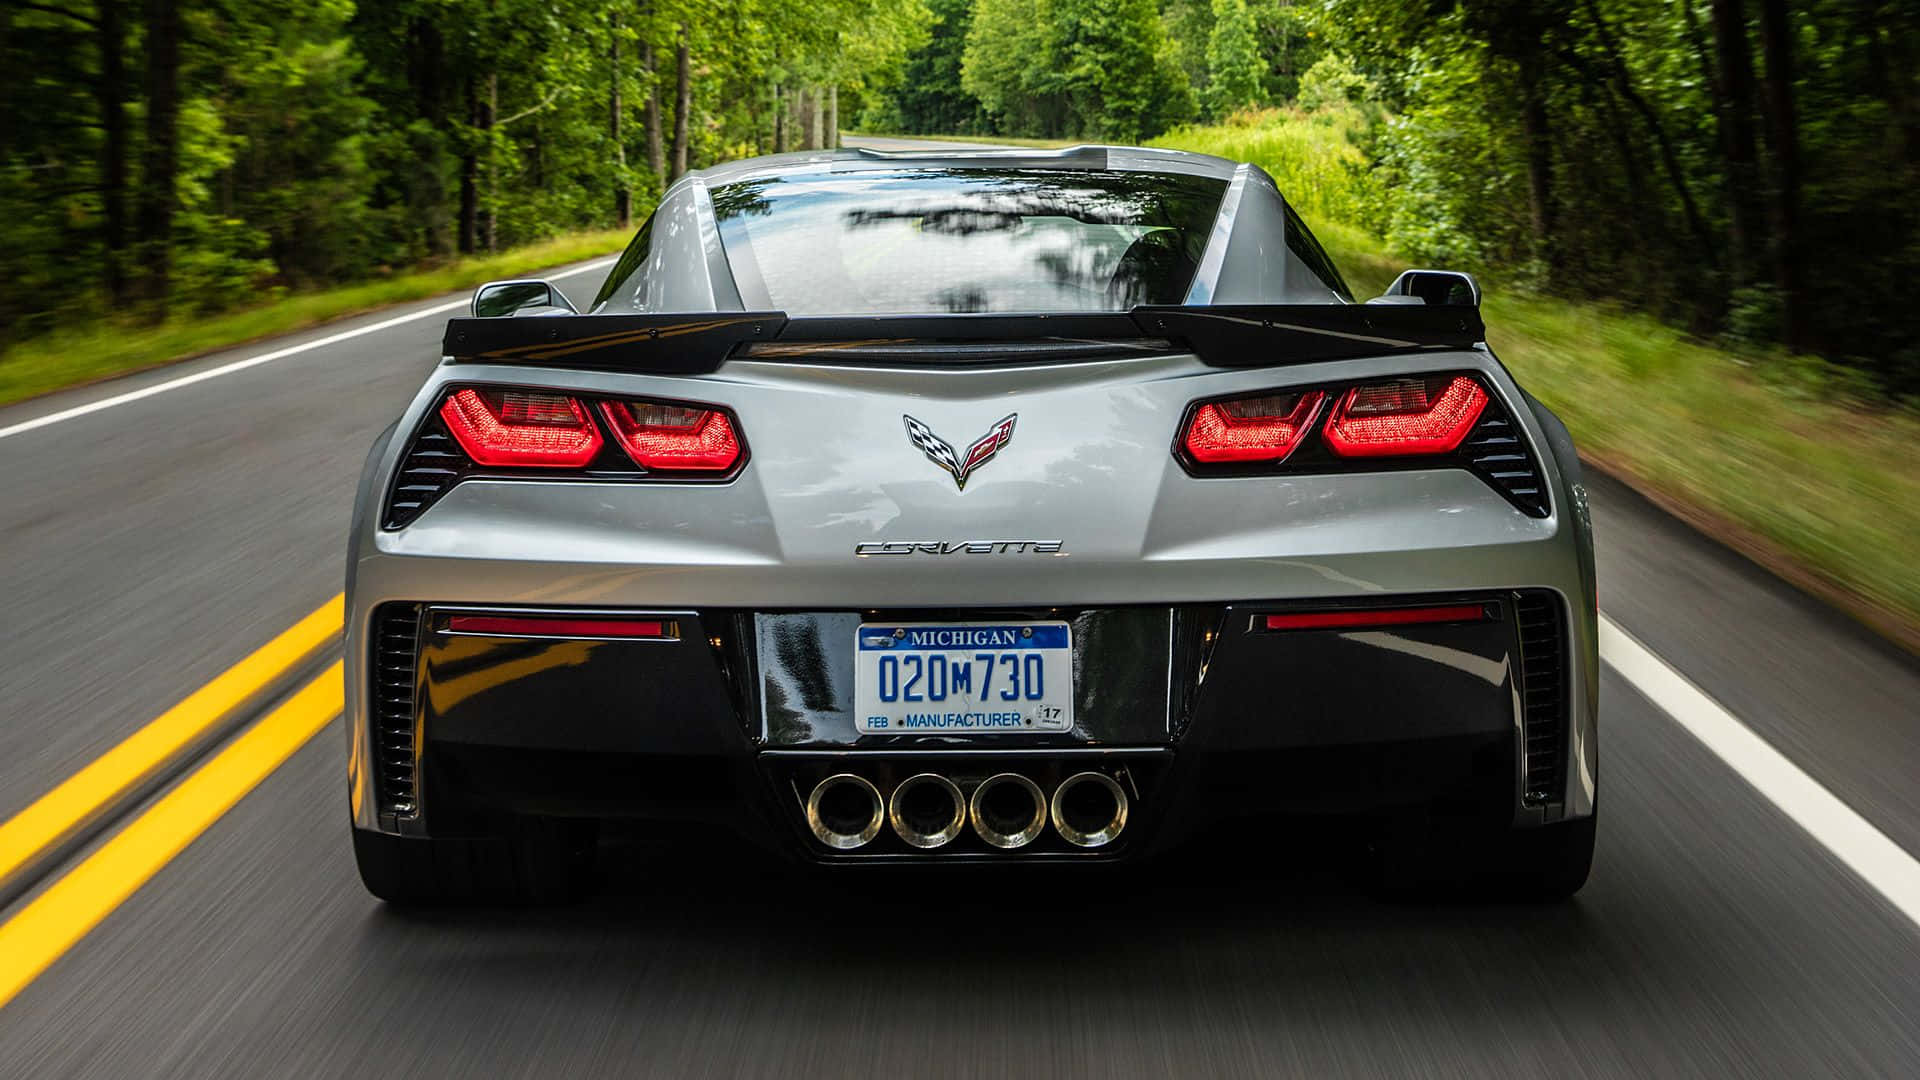 Impresionantechevrolet Corvette Grand Sport En Todo Su Esplendor. Fondo de pantalla